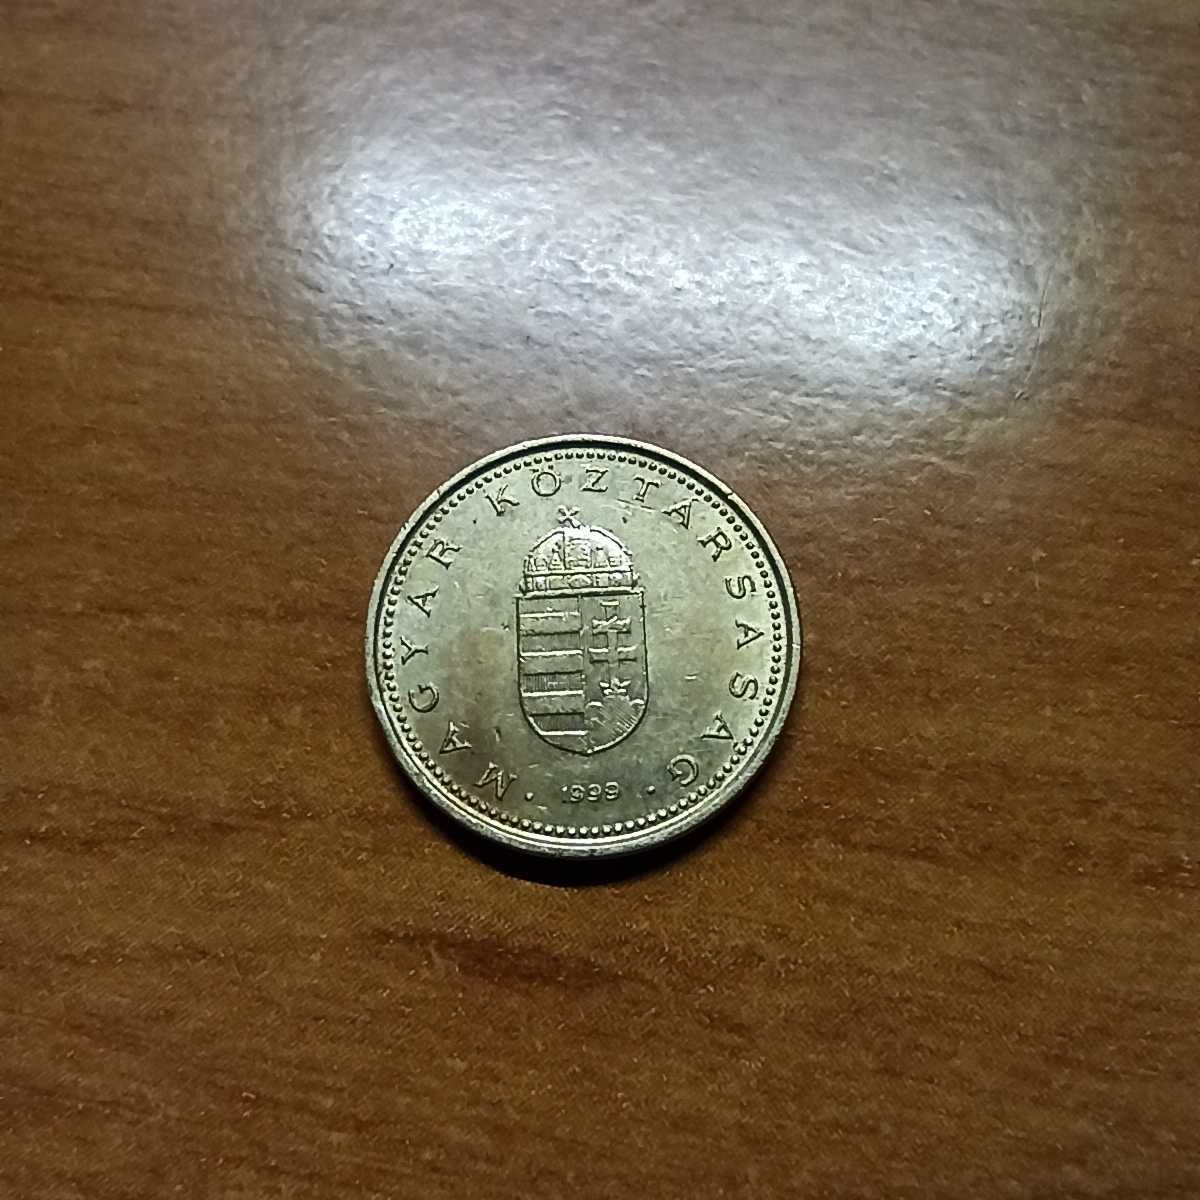 Moneta - 1 forint, 1999r